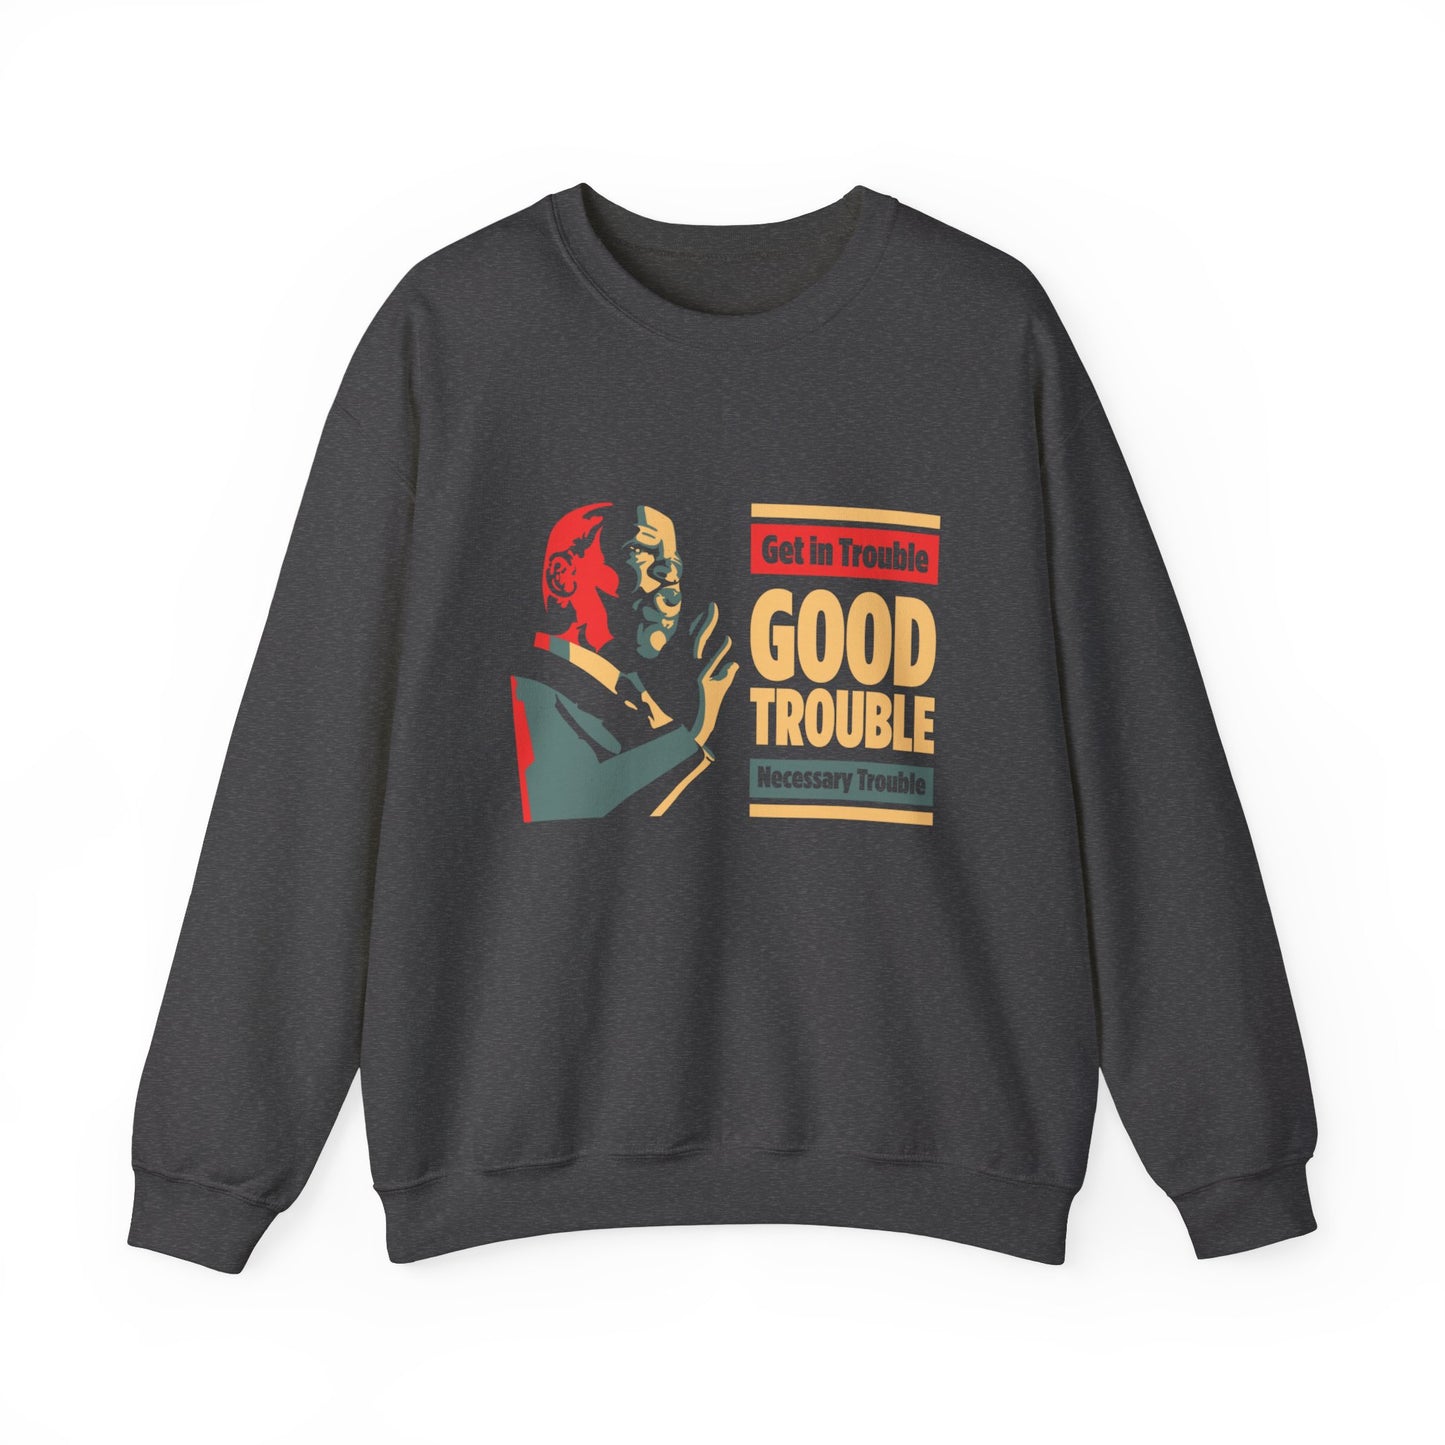 “John Lewis: Good Trouble” Unisex Sweatshirt